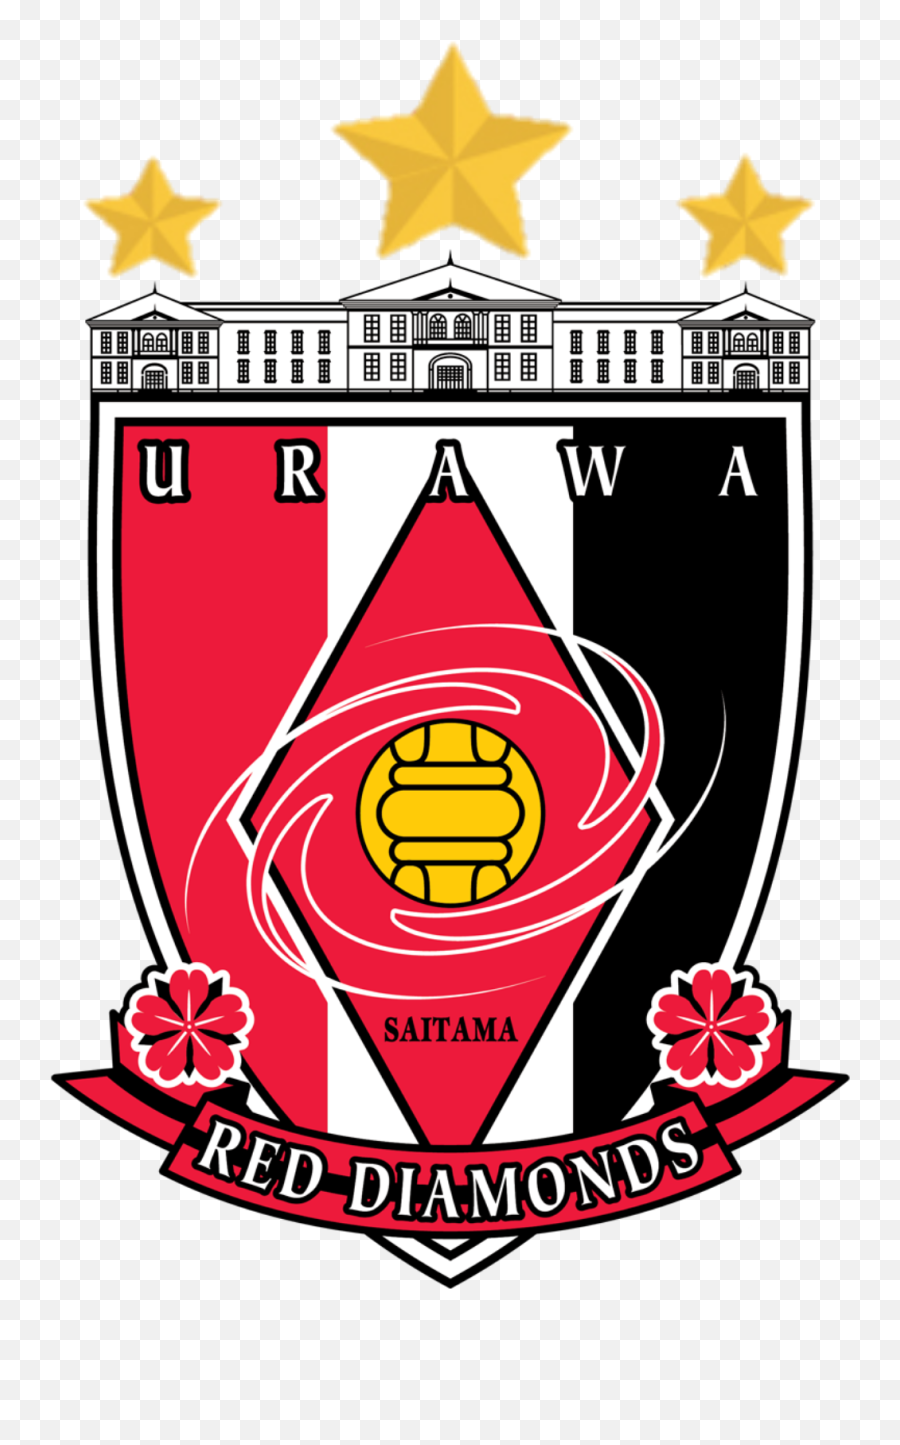 Urawa Red Diamonds Vs Kawasaki Frontale - Urawa Red Diamonds Emoji,Reds Logo